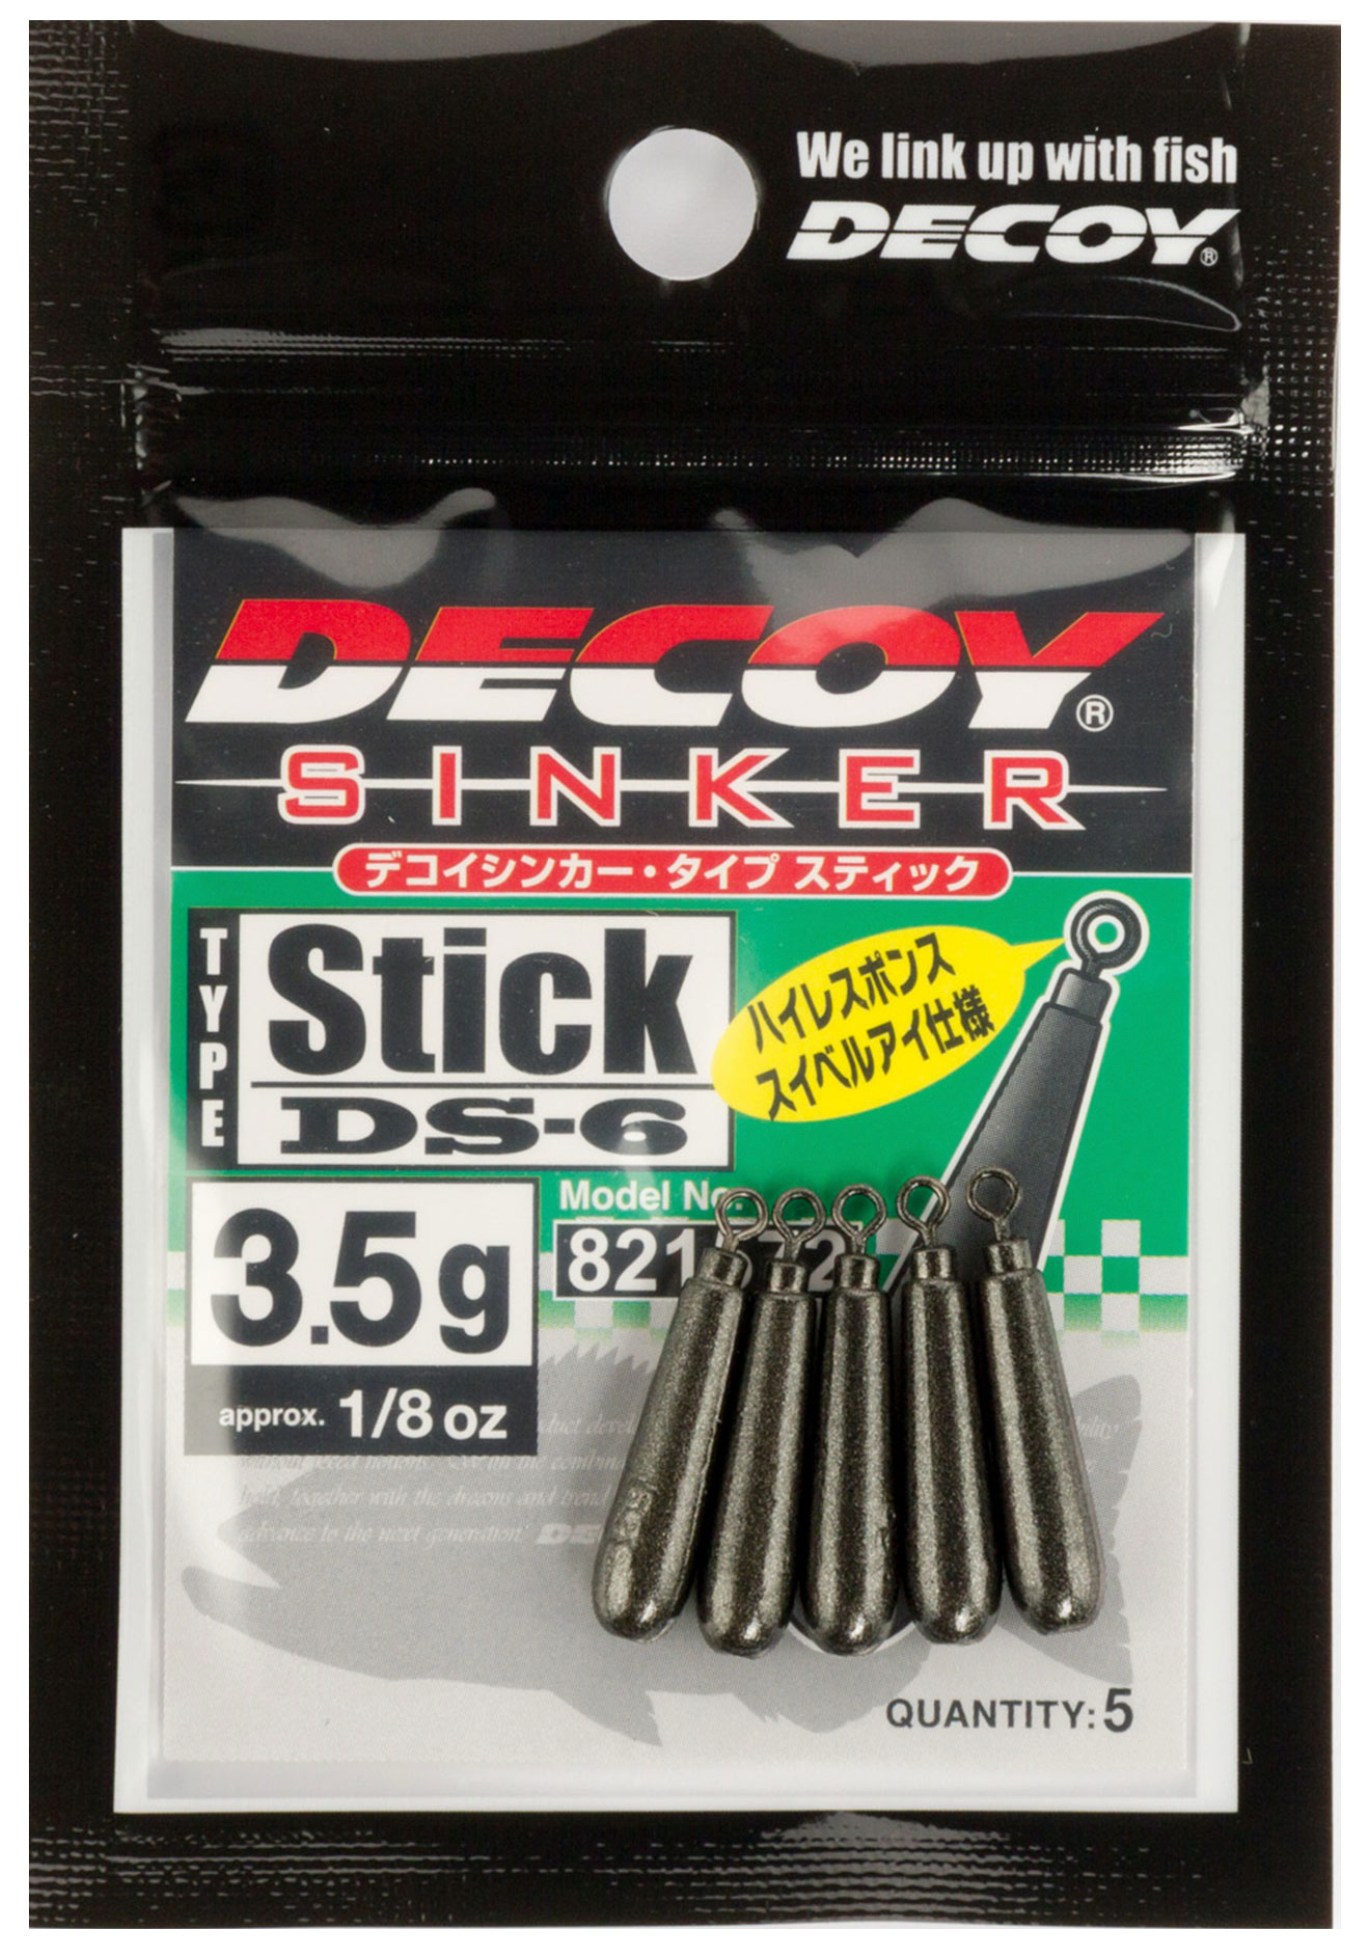 Decoy Stick DS-6 Sinker